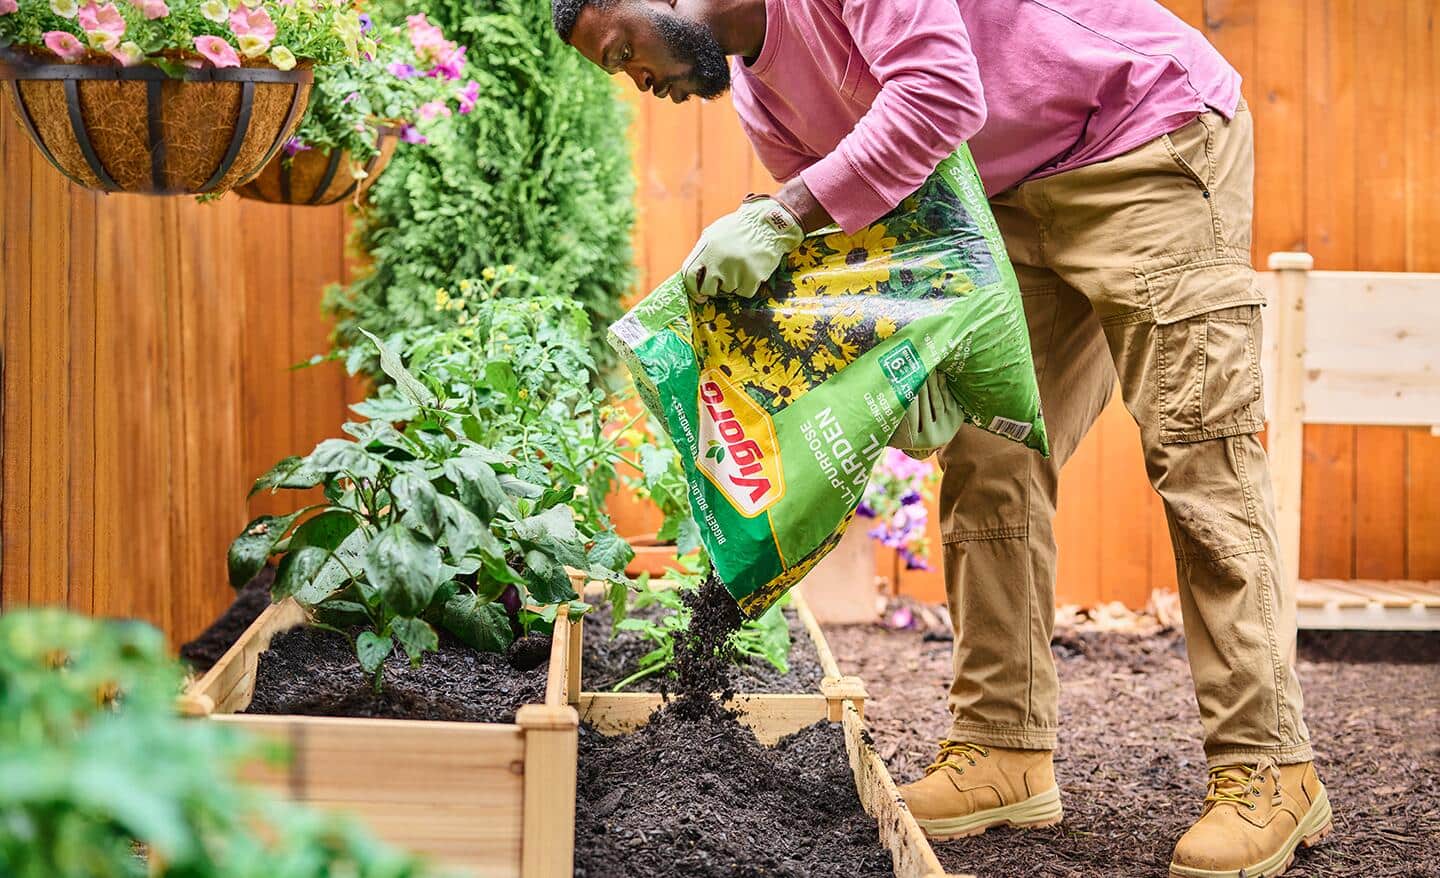 A person adds garden soil to a raised bed garden.